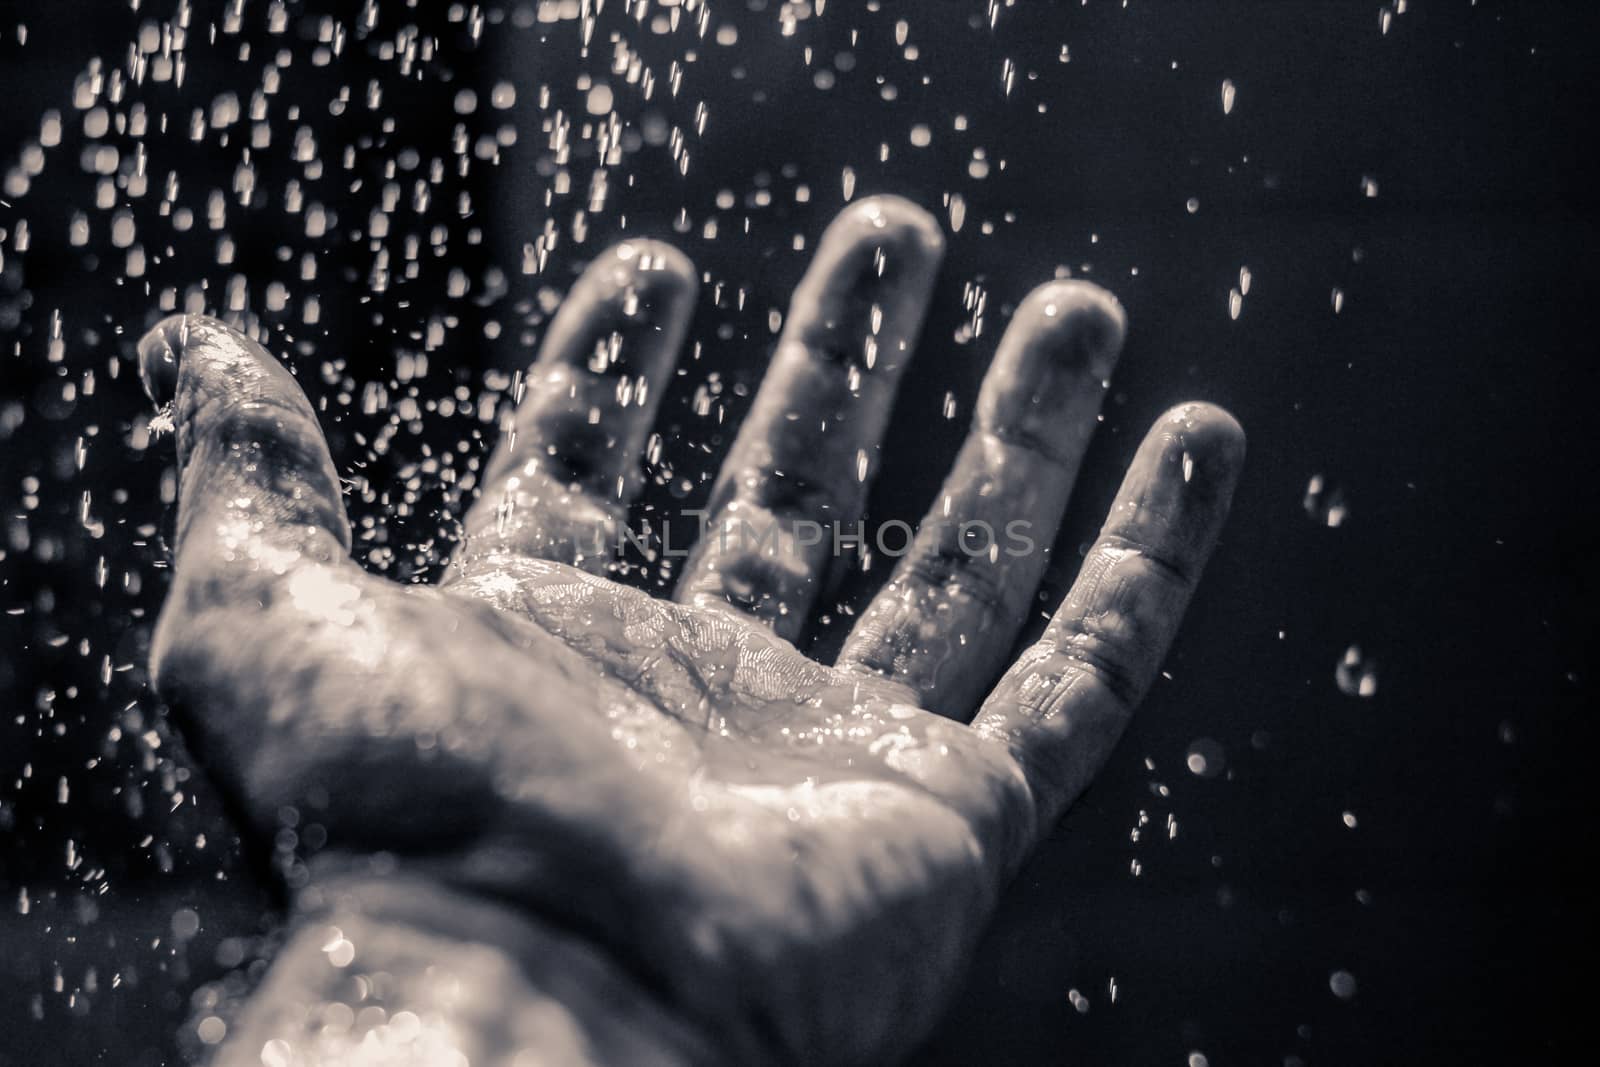 Photograph of an open human hand under water drops